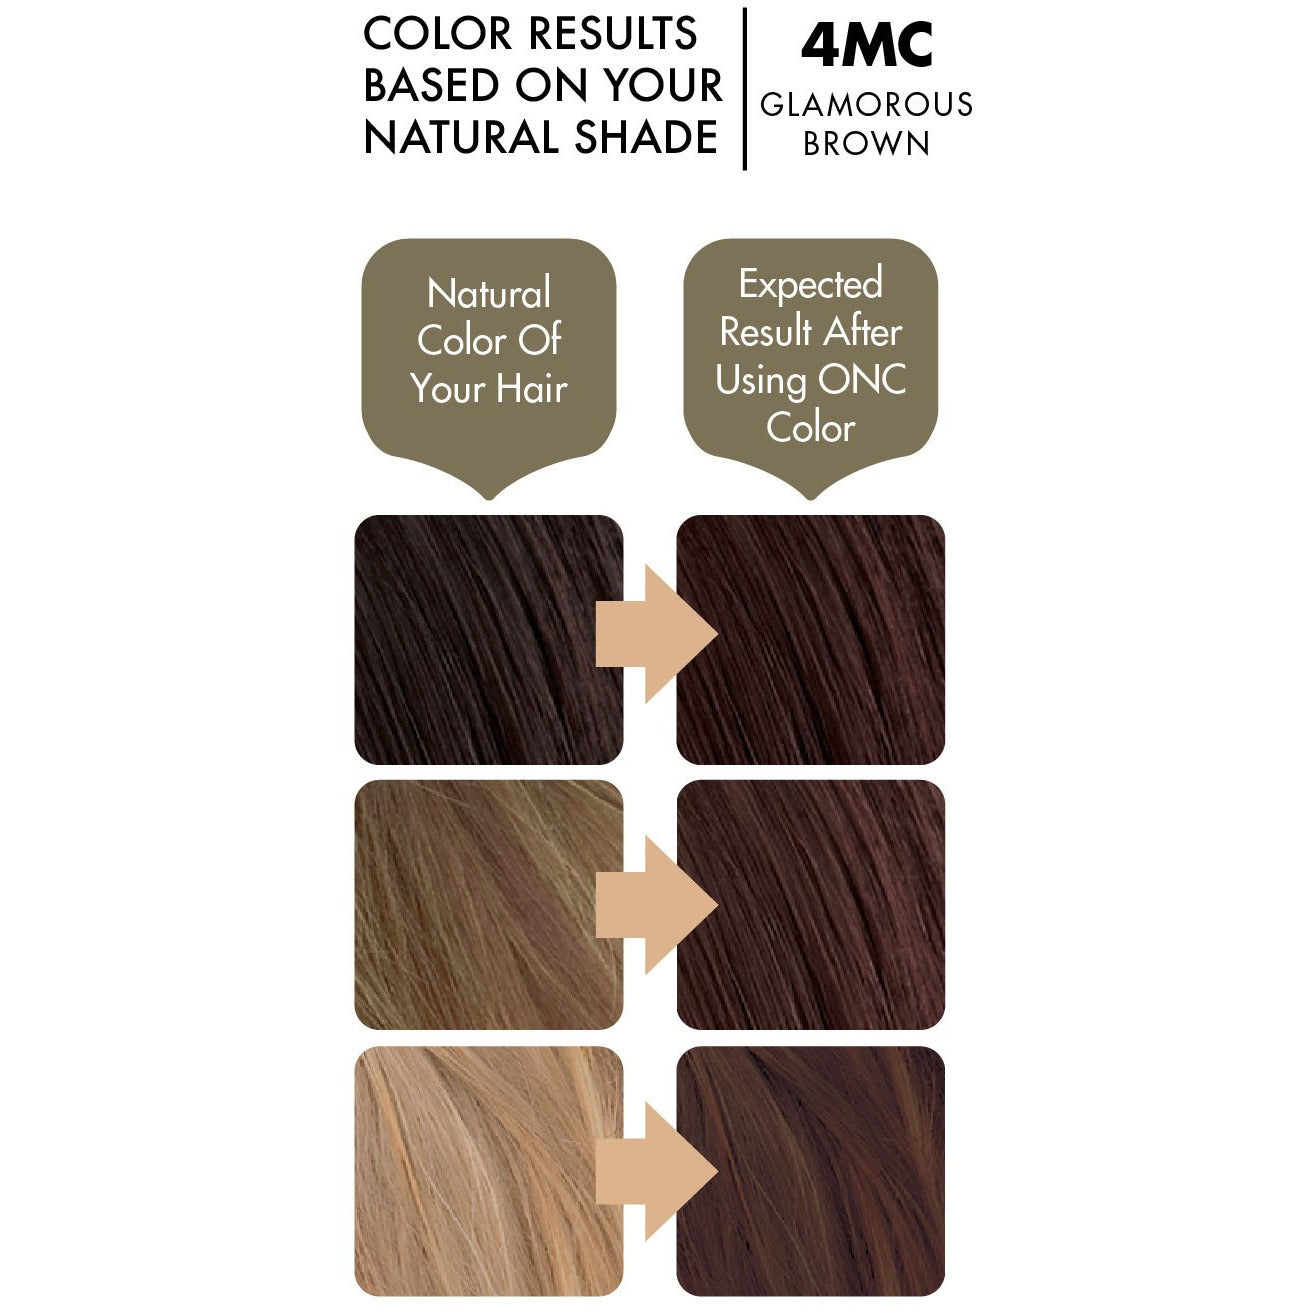 ONC 4MC Glamorous Brown Hair Dye With Organic Ingredients 120 mL / 4 fl. oz. Color Results